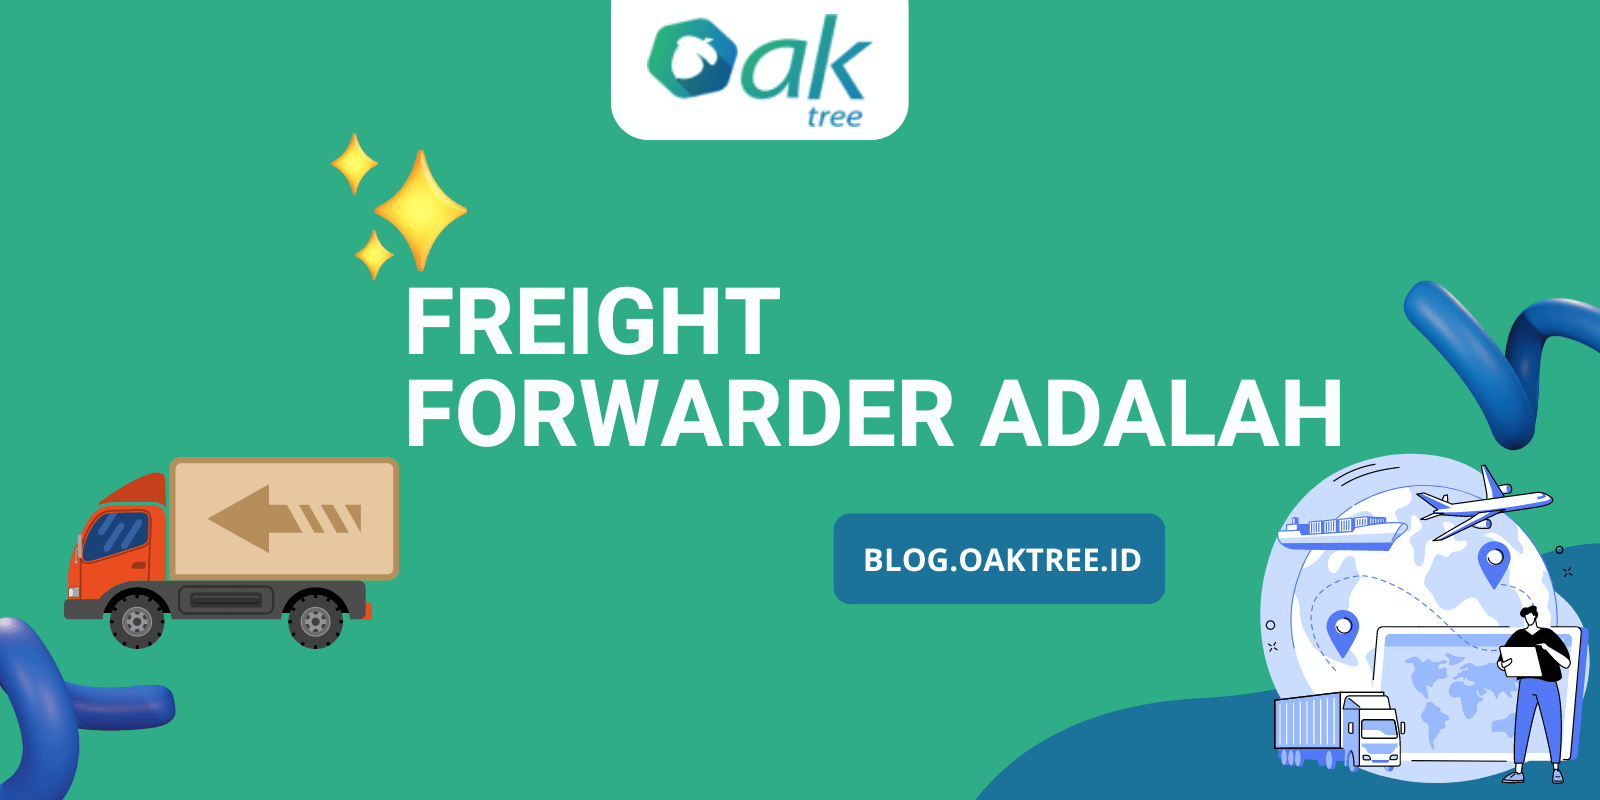 Freight Forwarder adalah